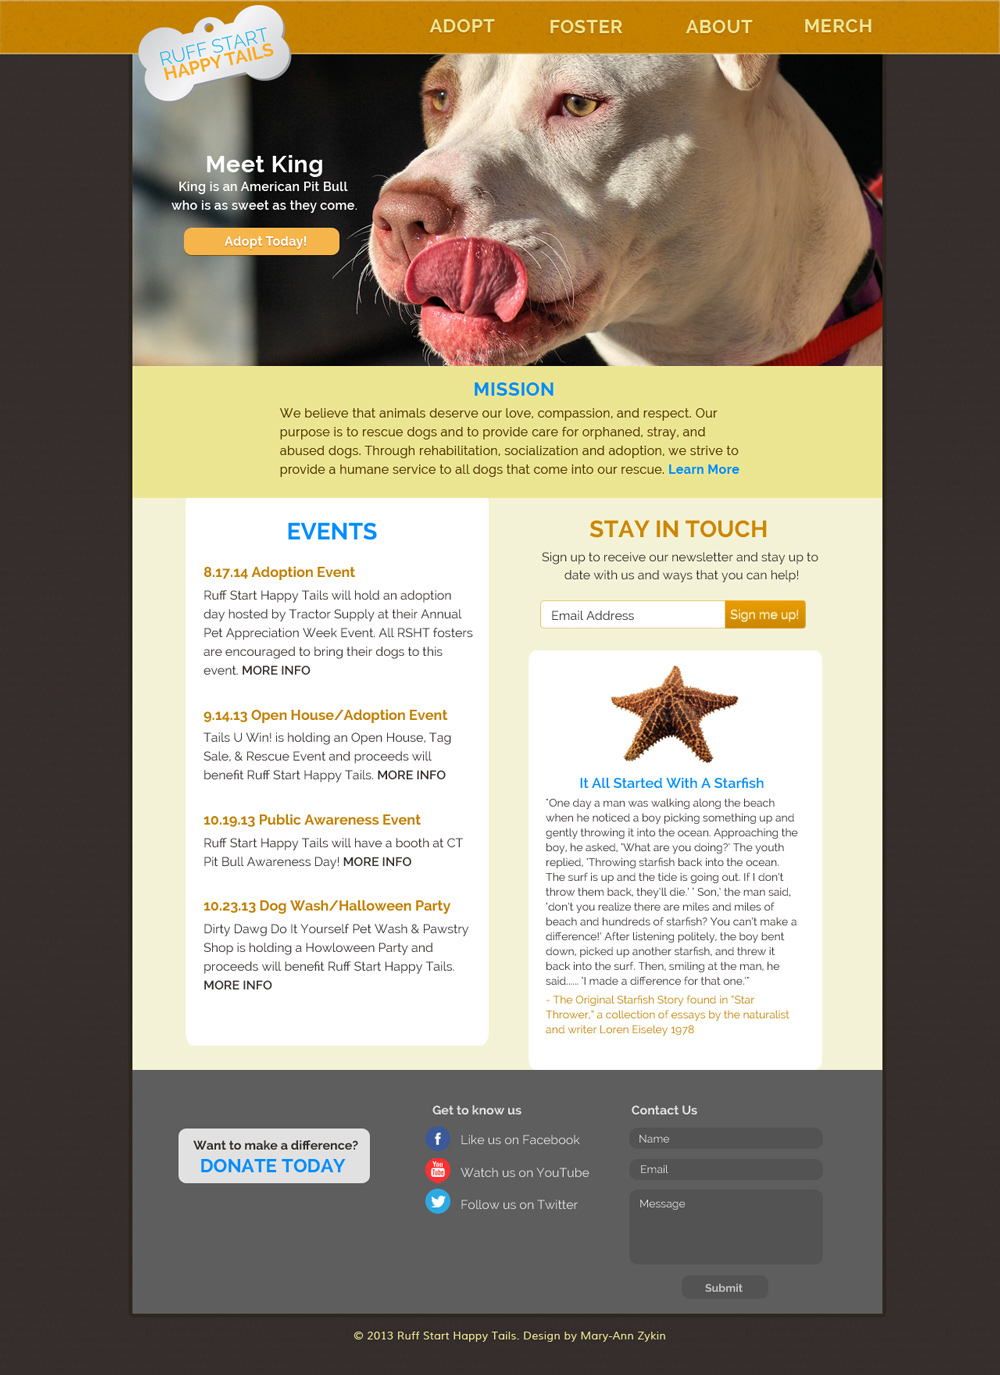 poster poscard postcard dog dogs non-profit nonprofit organization org shelter Foster adopt Mary-Ann Zykin  Website